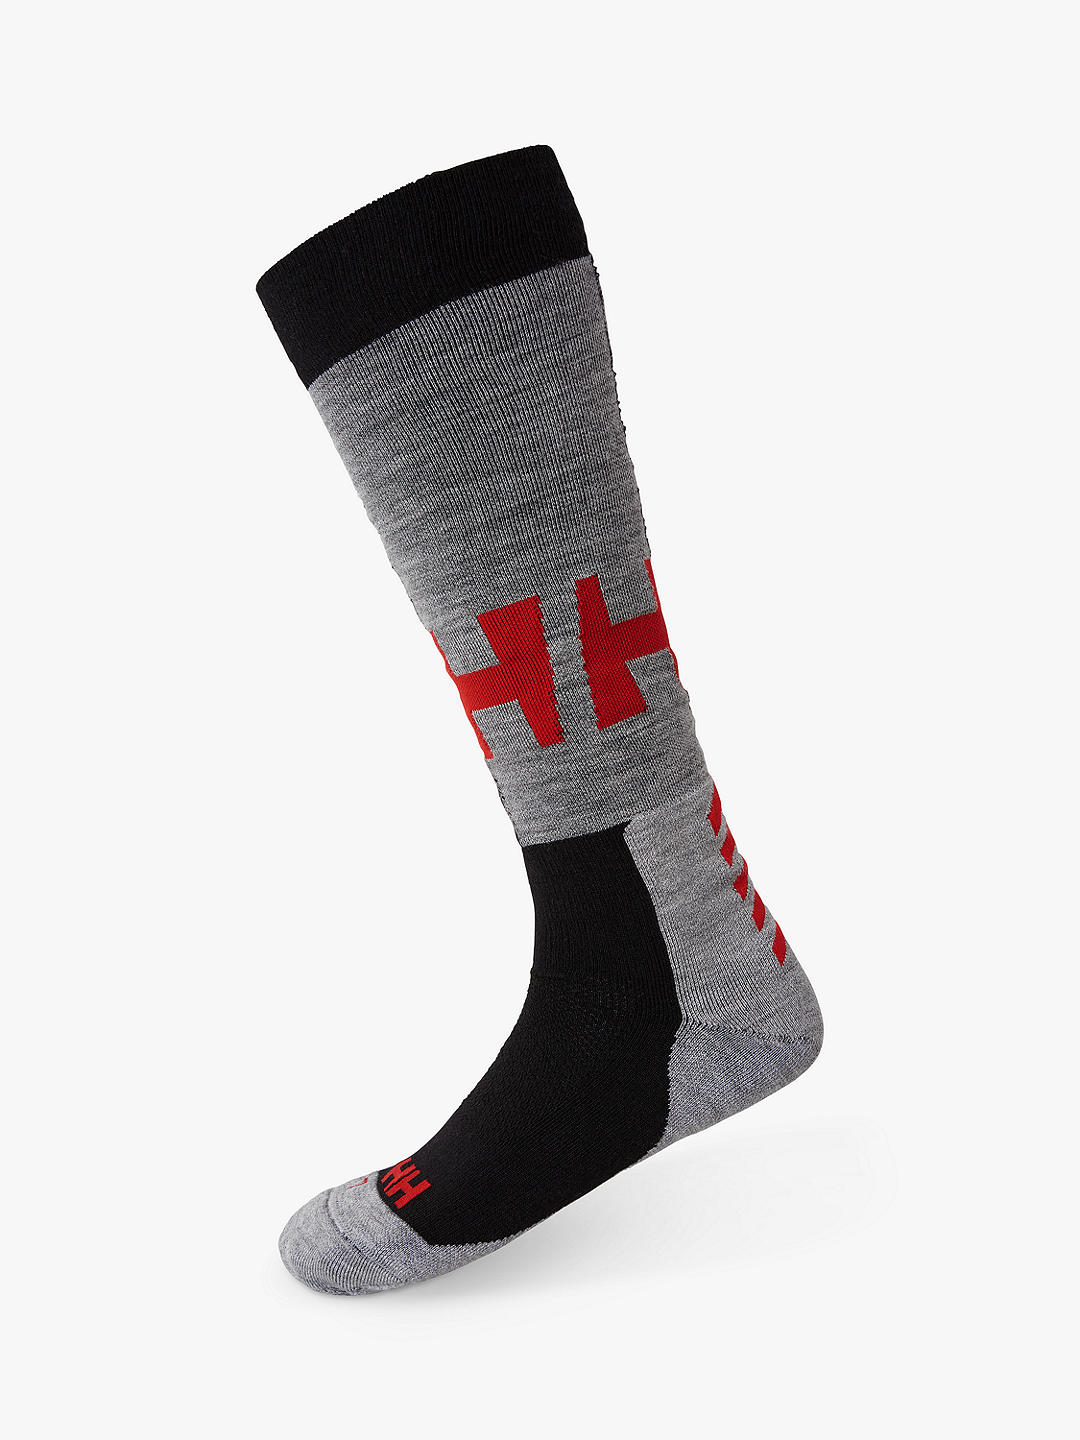 Helly Hansen Alpine Wool Blend Men's Socks, Black